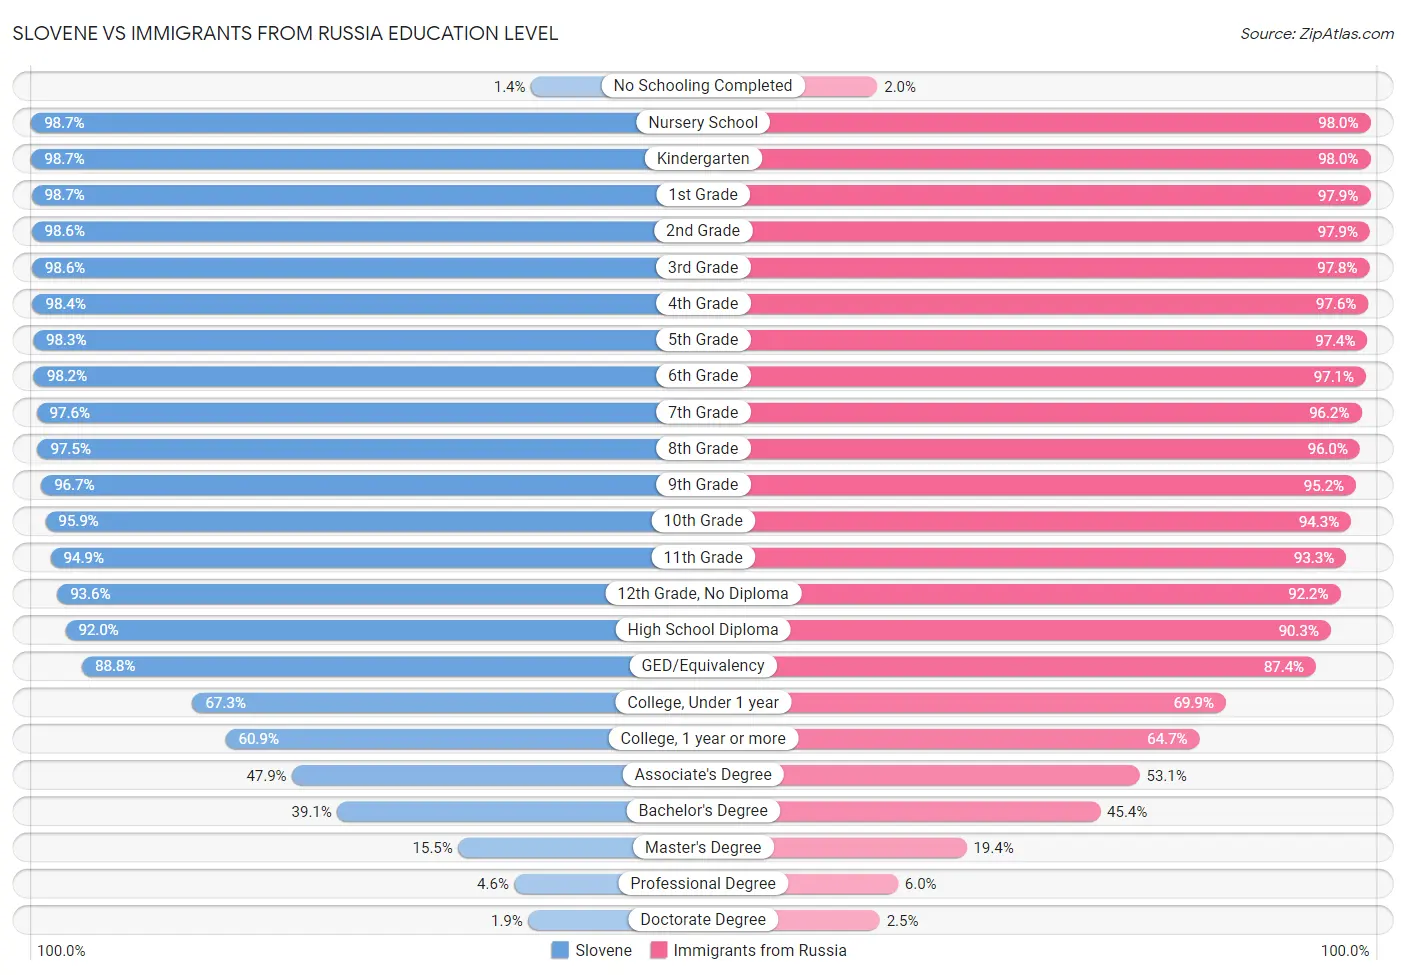 Slovene vs Immigrants from Russia Education Level